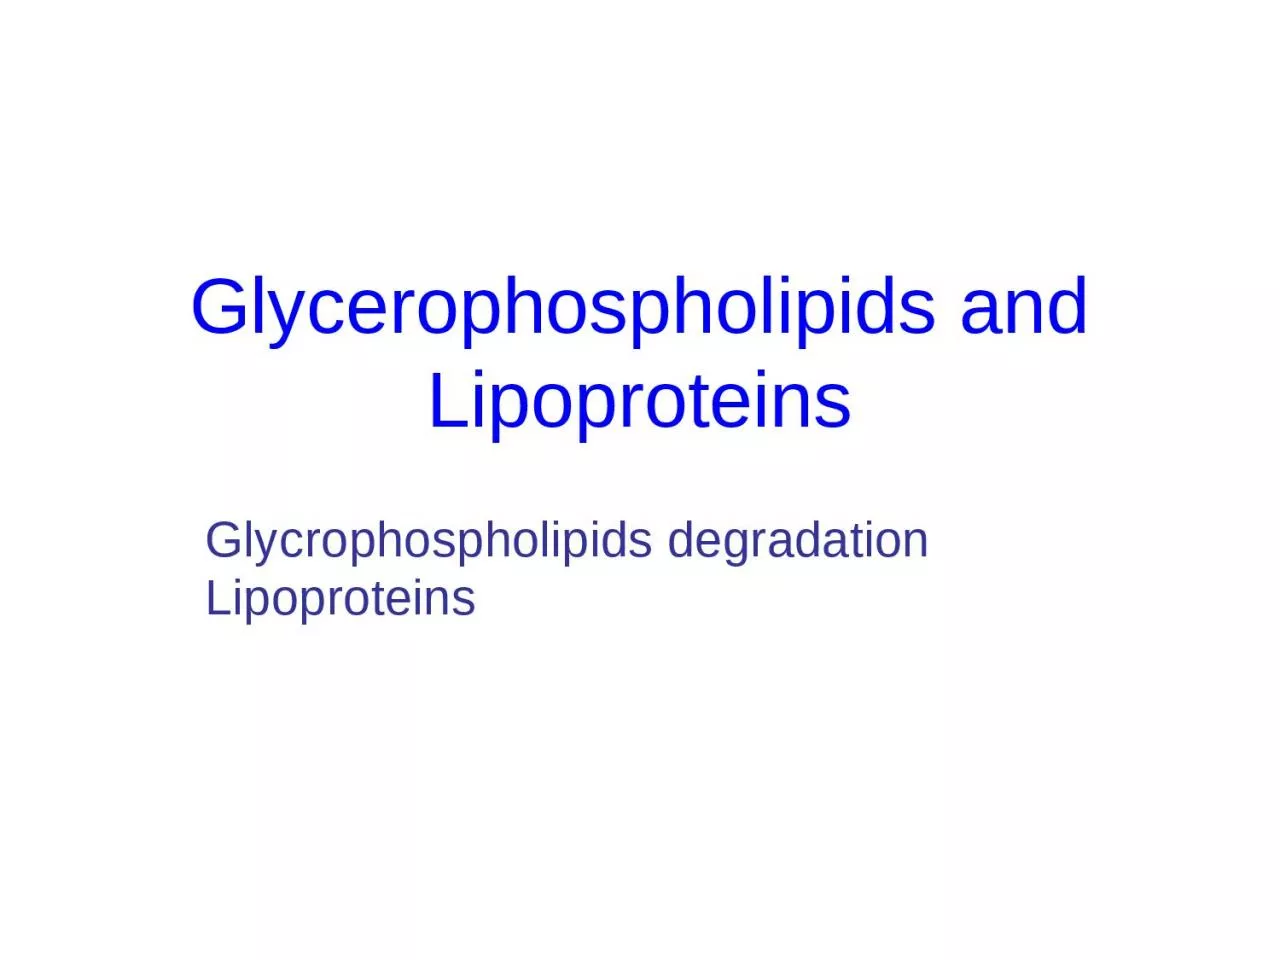 Glycerophospholipids and Lipoproteins